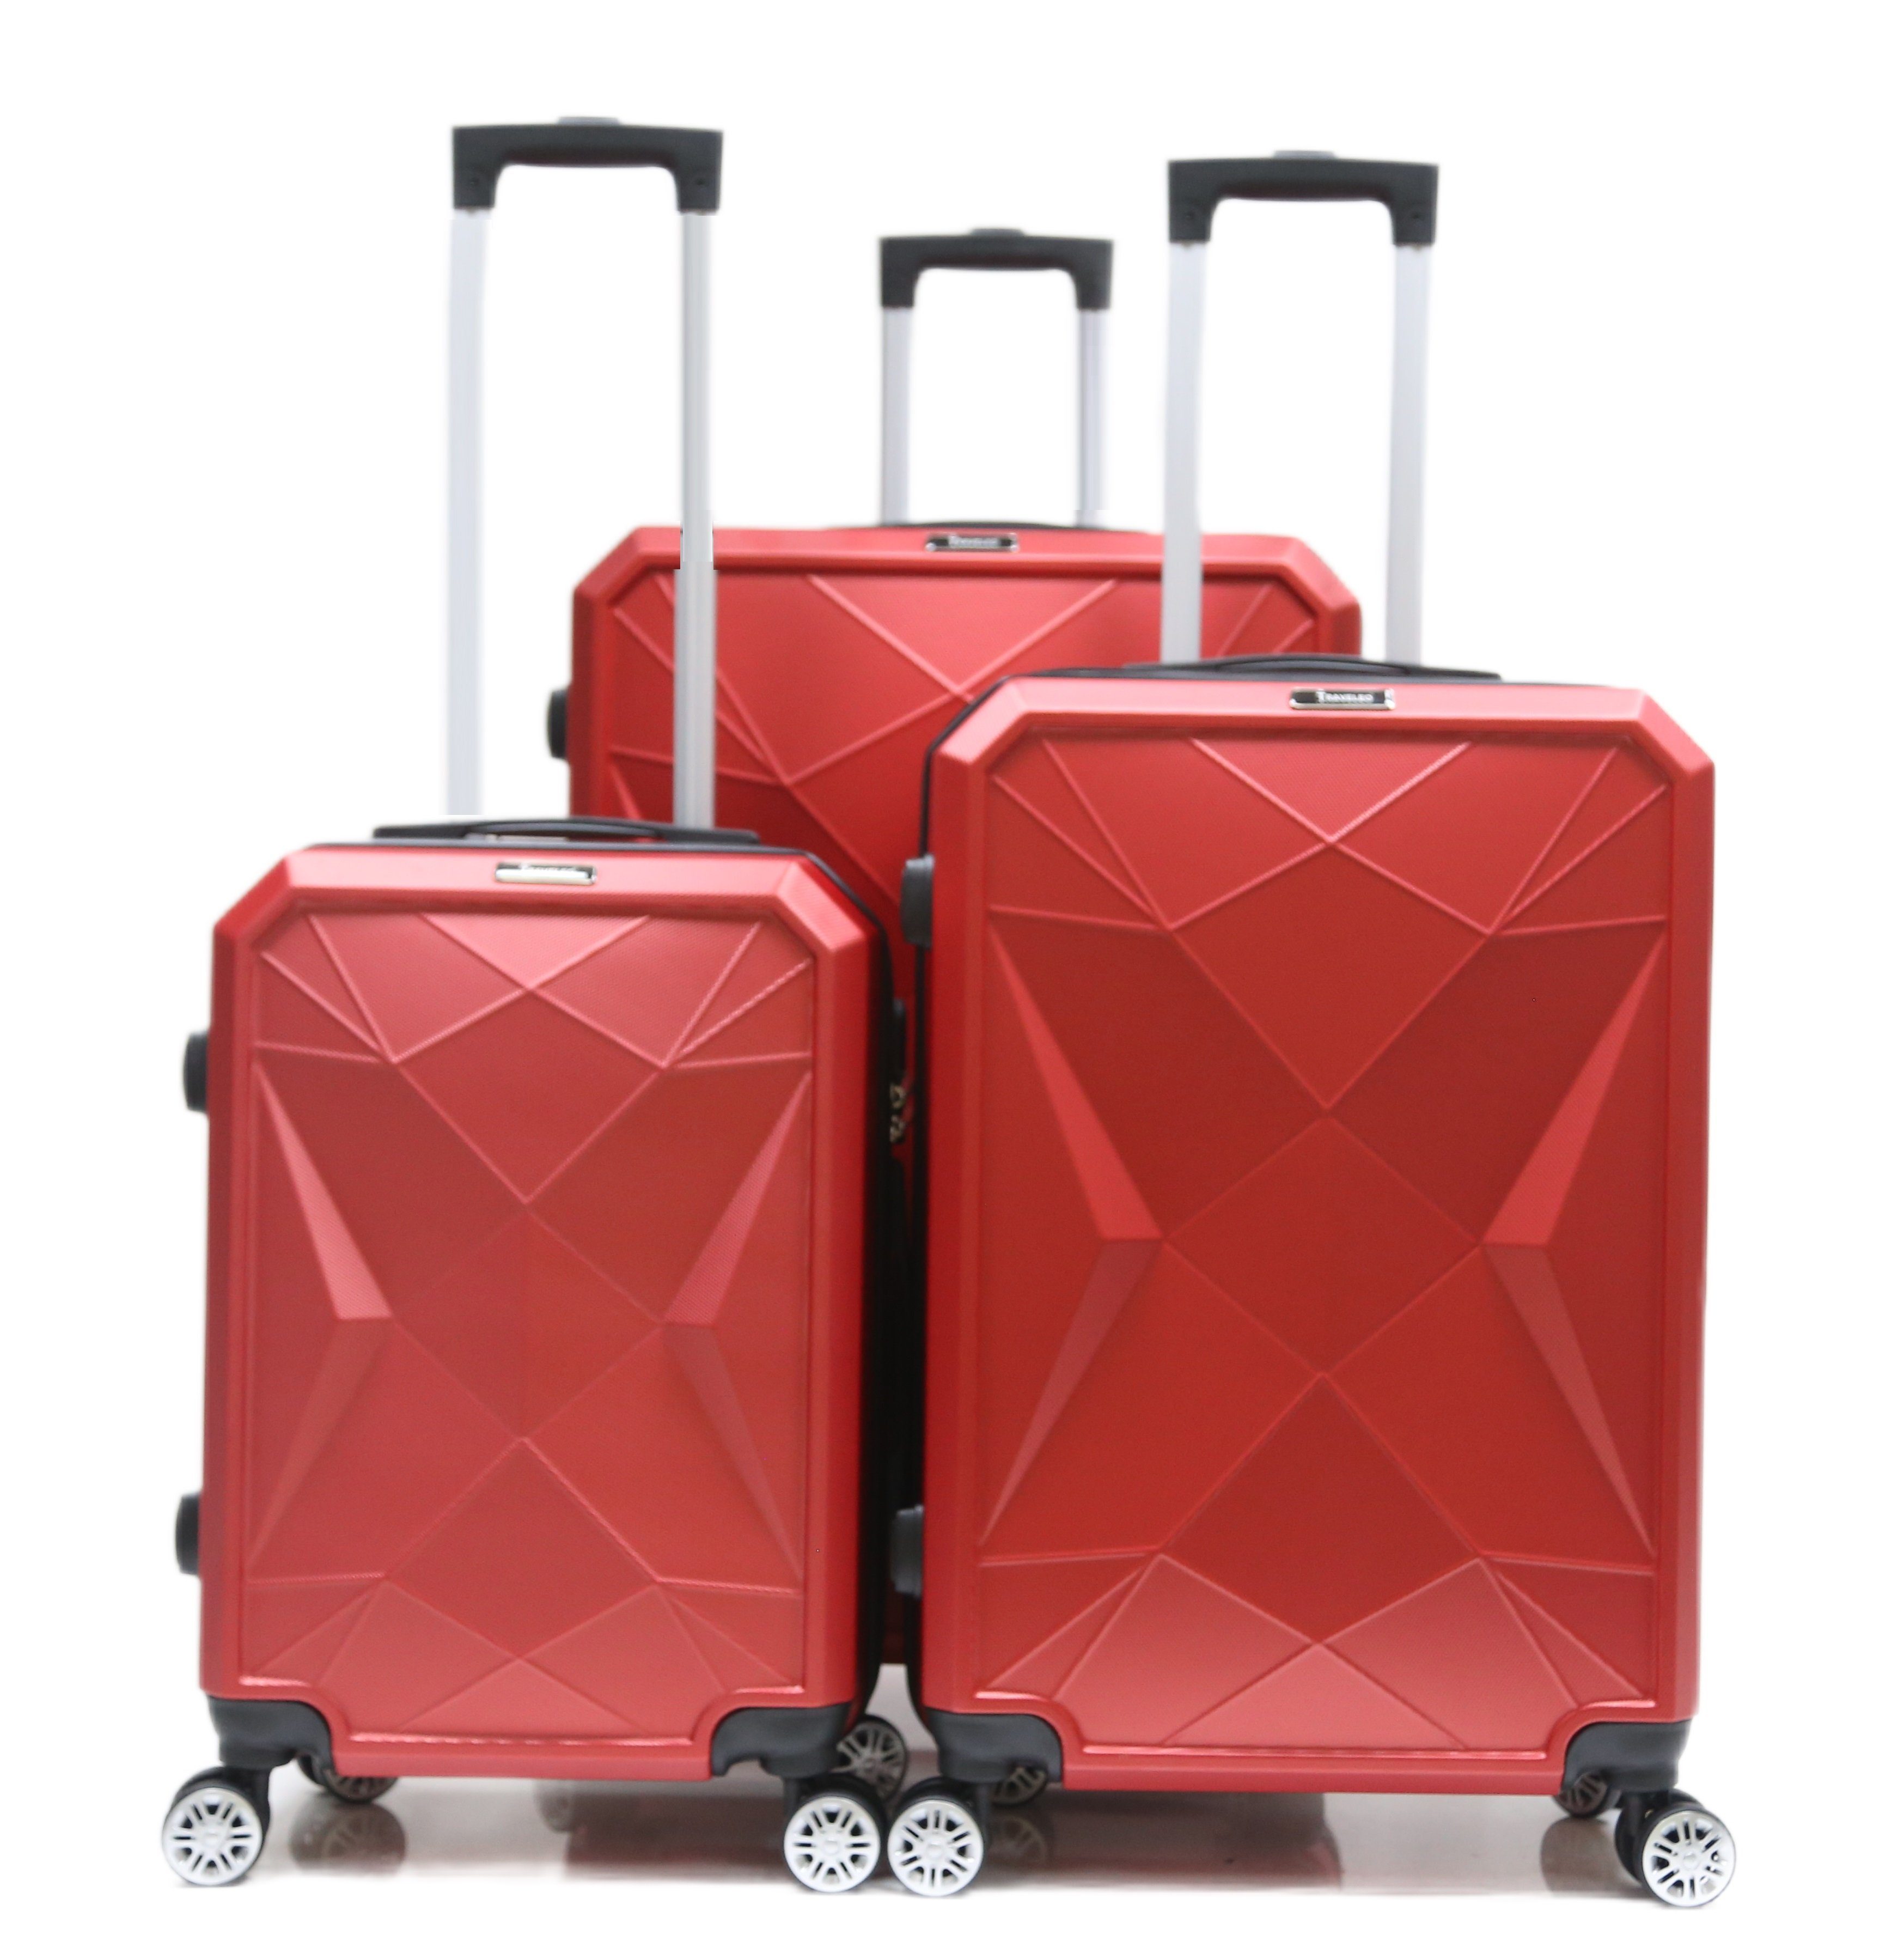 Cheffinger Kofferset Reisekoffer ABS-03 Koffer 3-teilig Hartschale Trolley Set Kofferset, 4 Rollen, (3 tlg) Rot | Trolley-Sets